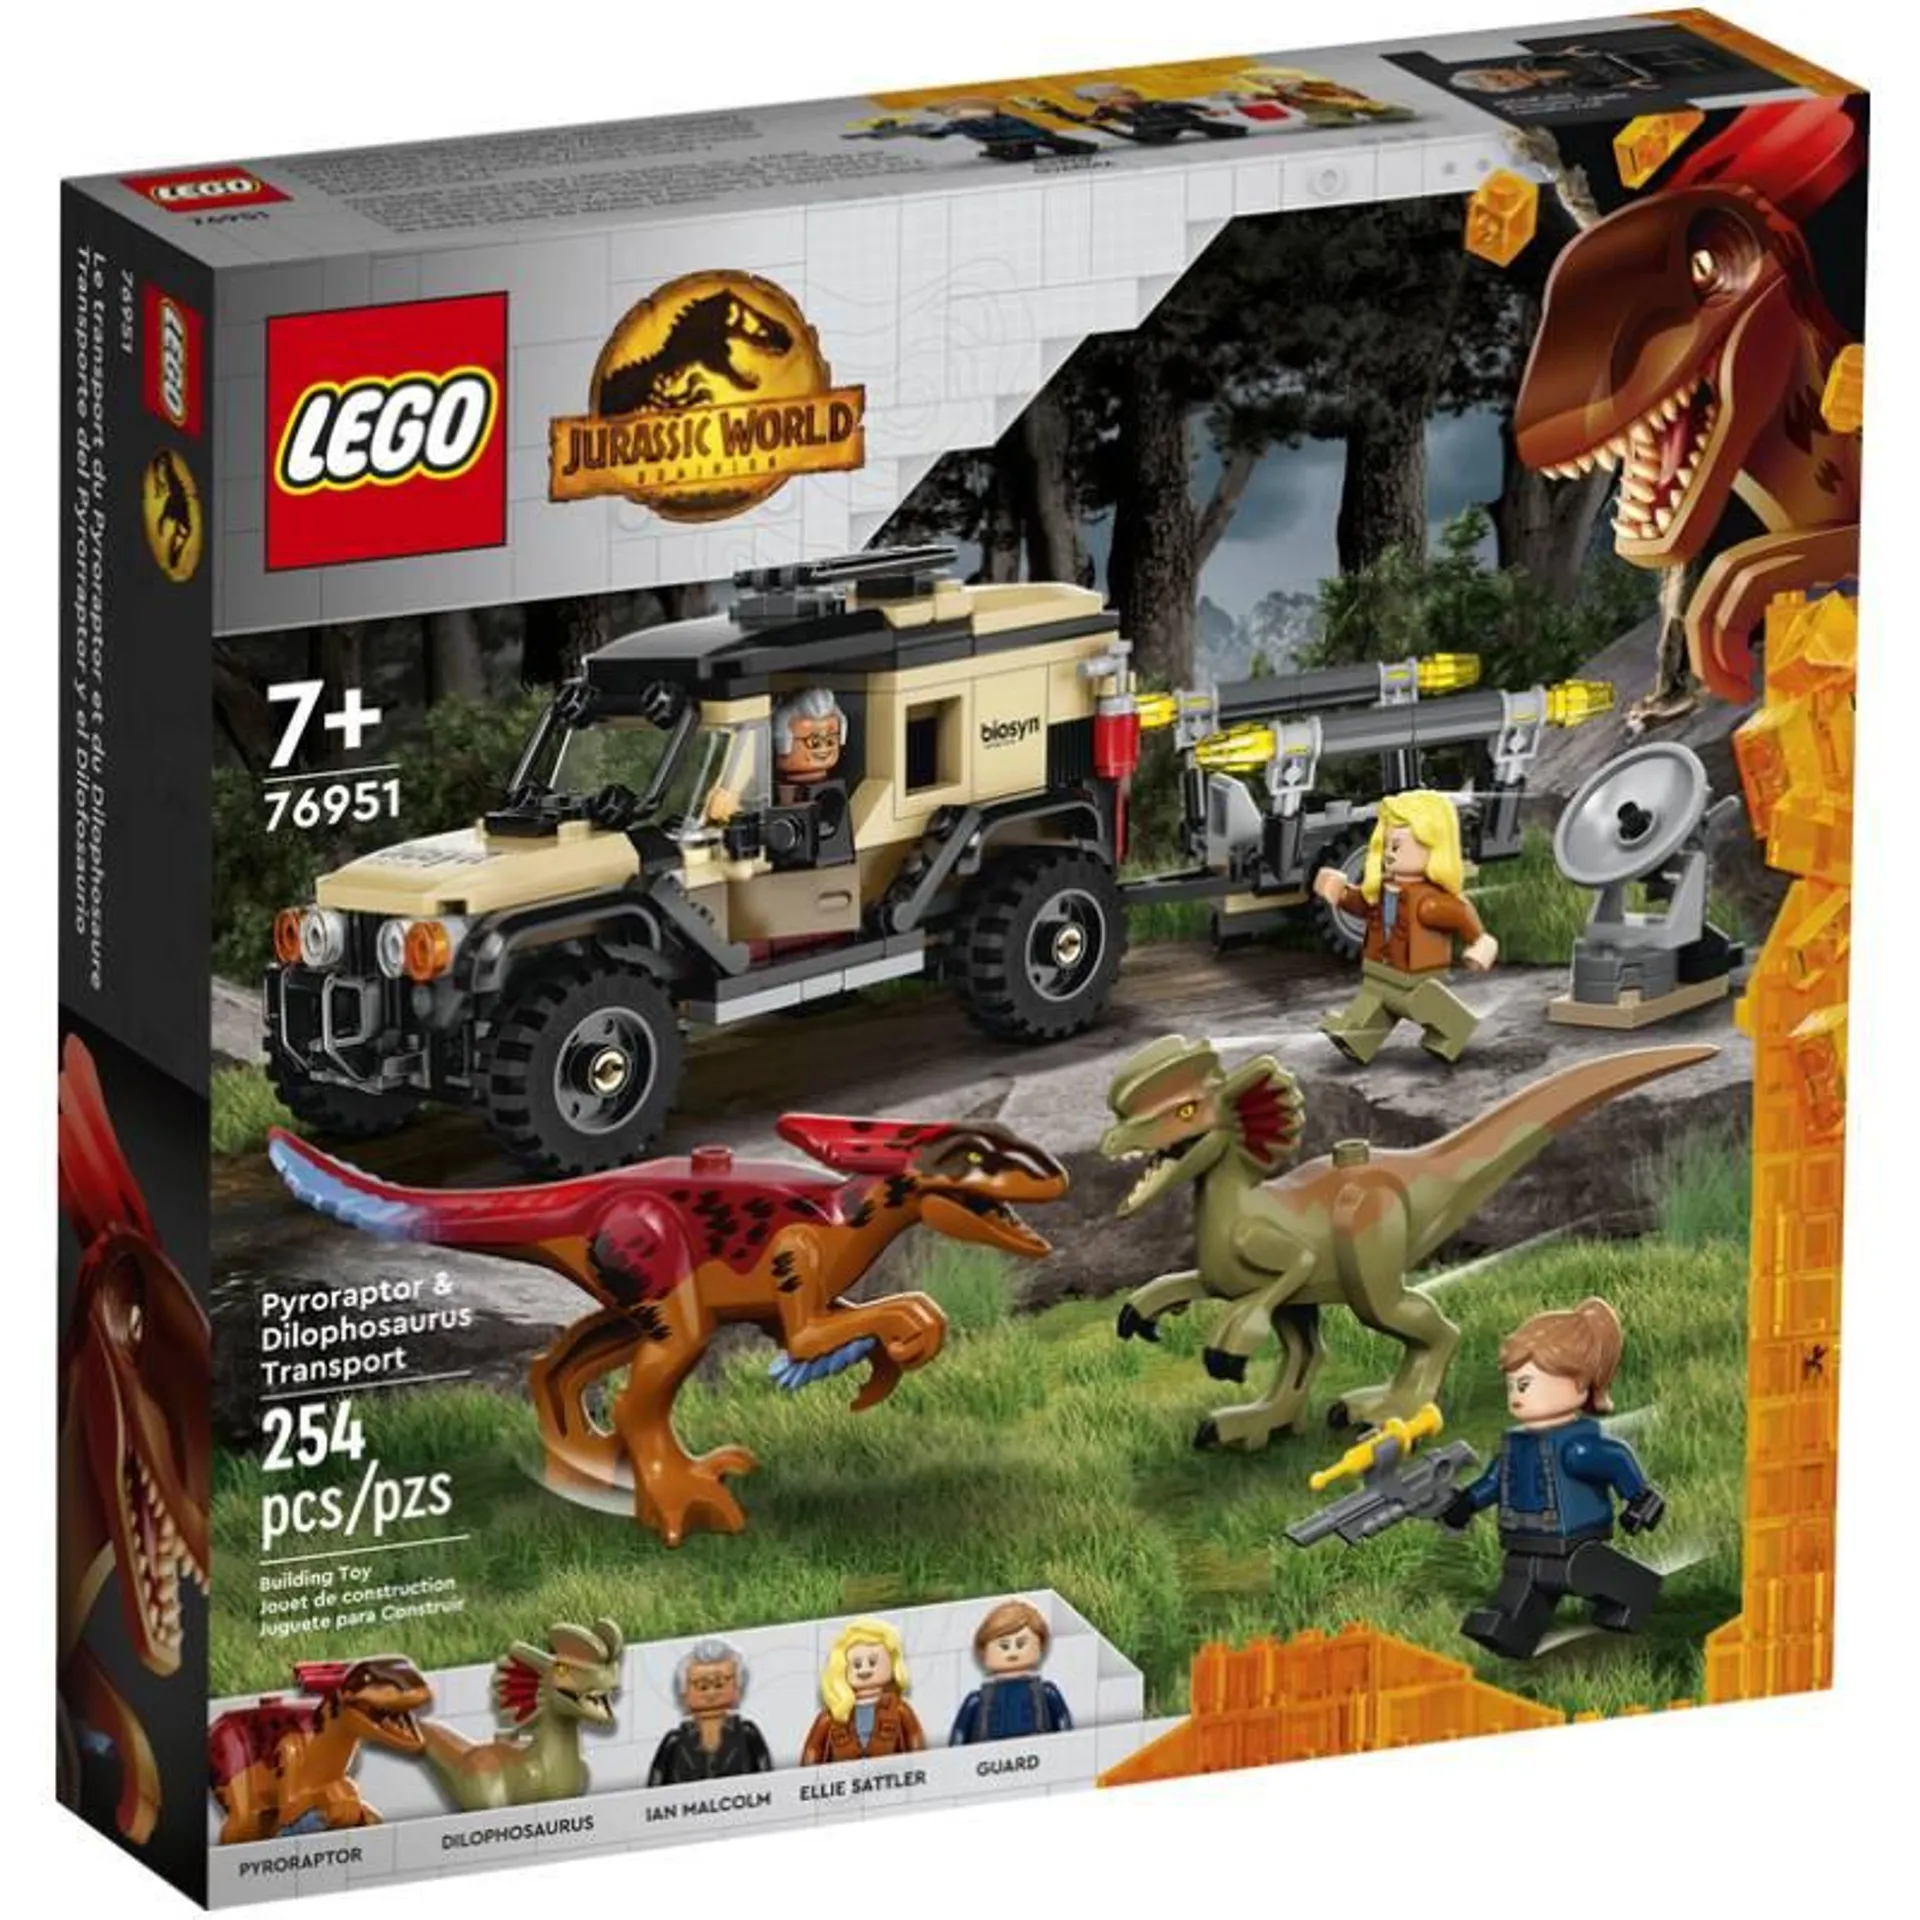 Lego Jurassic World Transporte del Pyrorraptor y el Dilofosaurio